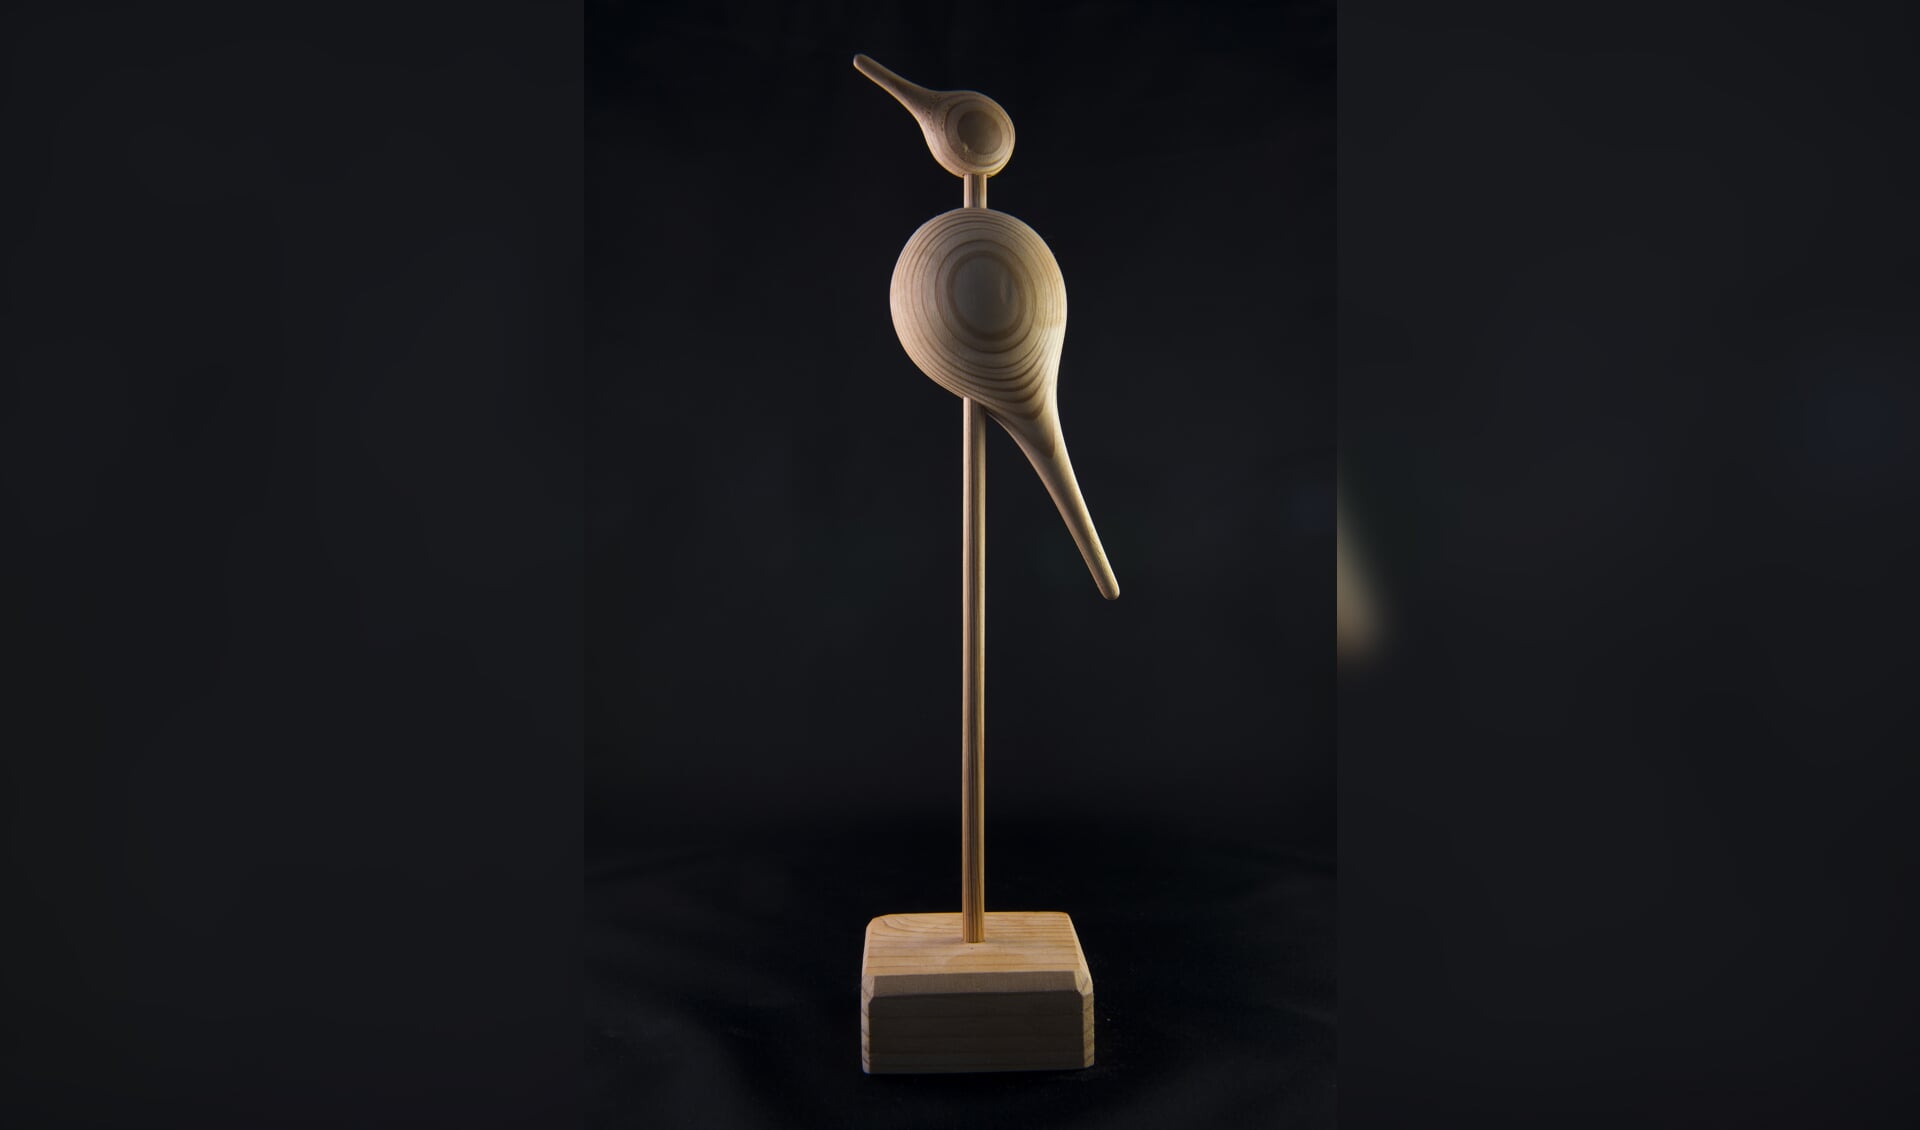 Het Berkellandvogeltje. Sculptuur van Jan Kulsdom. Foto: Jan Kulsdom